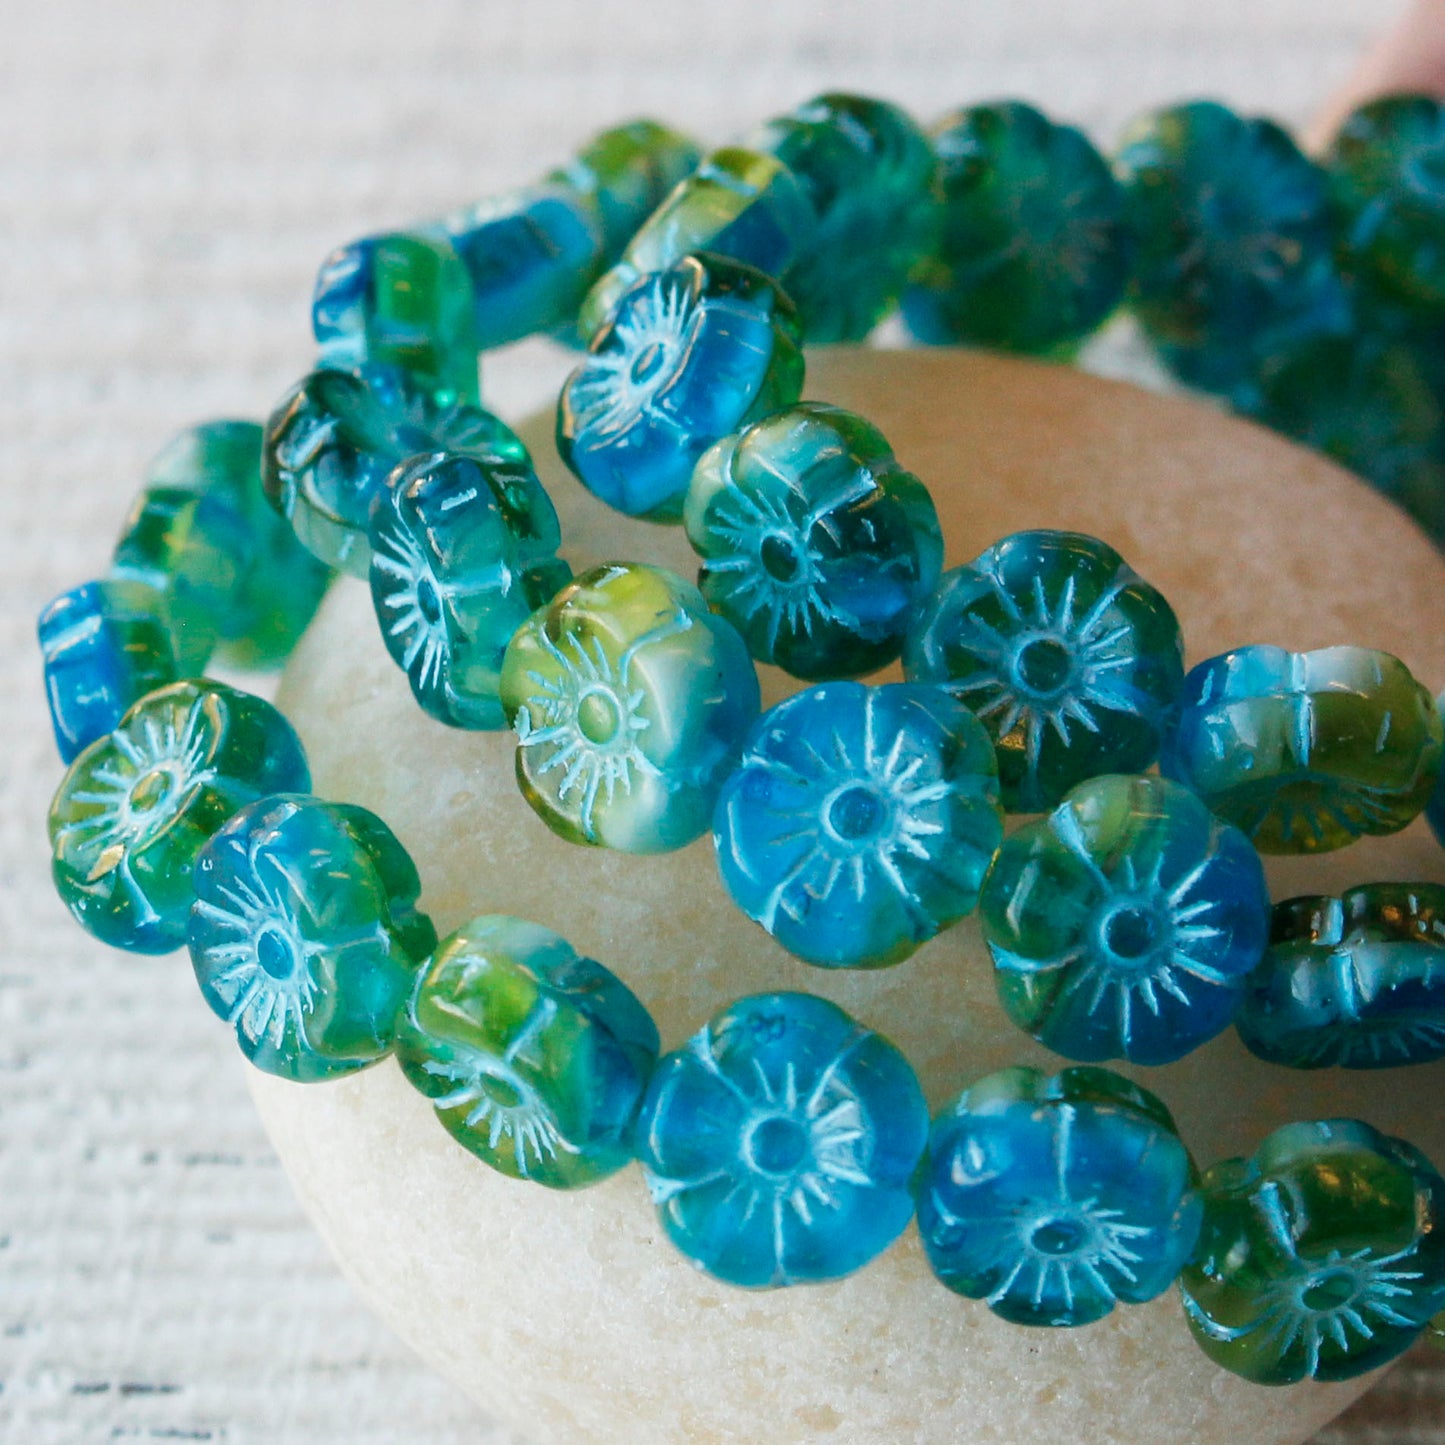 8mm Glass Flower Beads - Blue Green Mix - 10 or 30 Beads